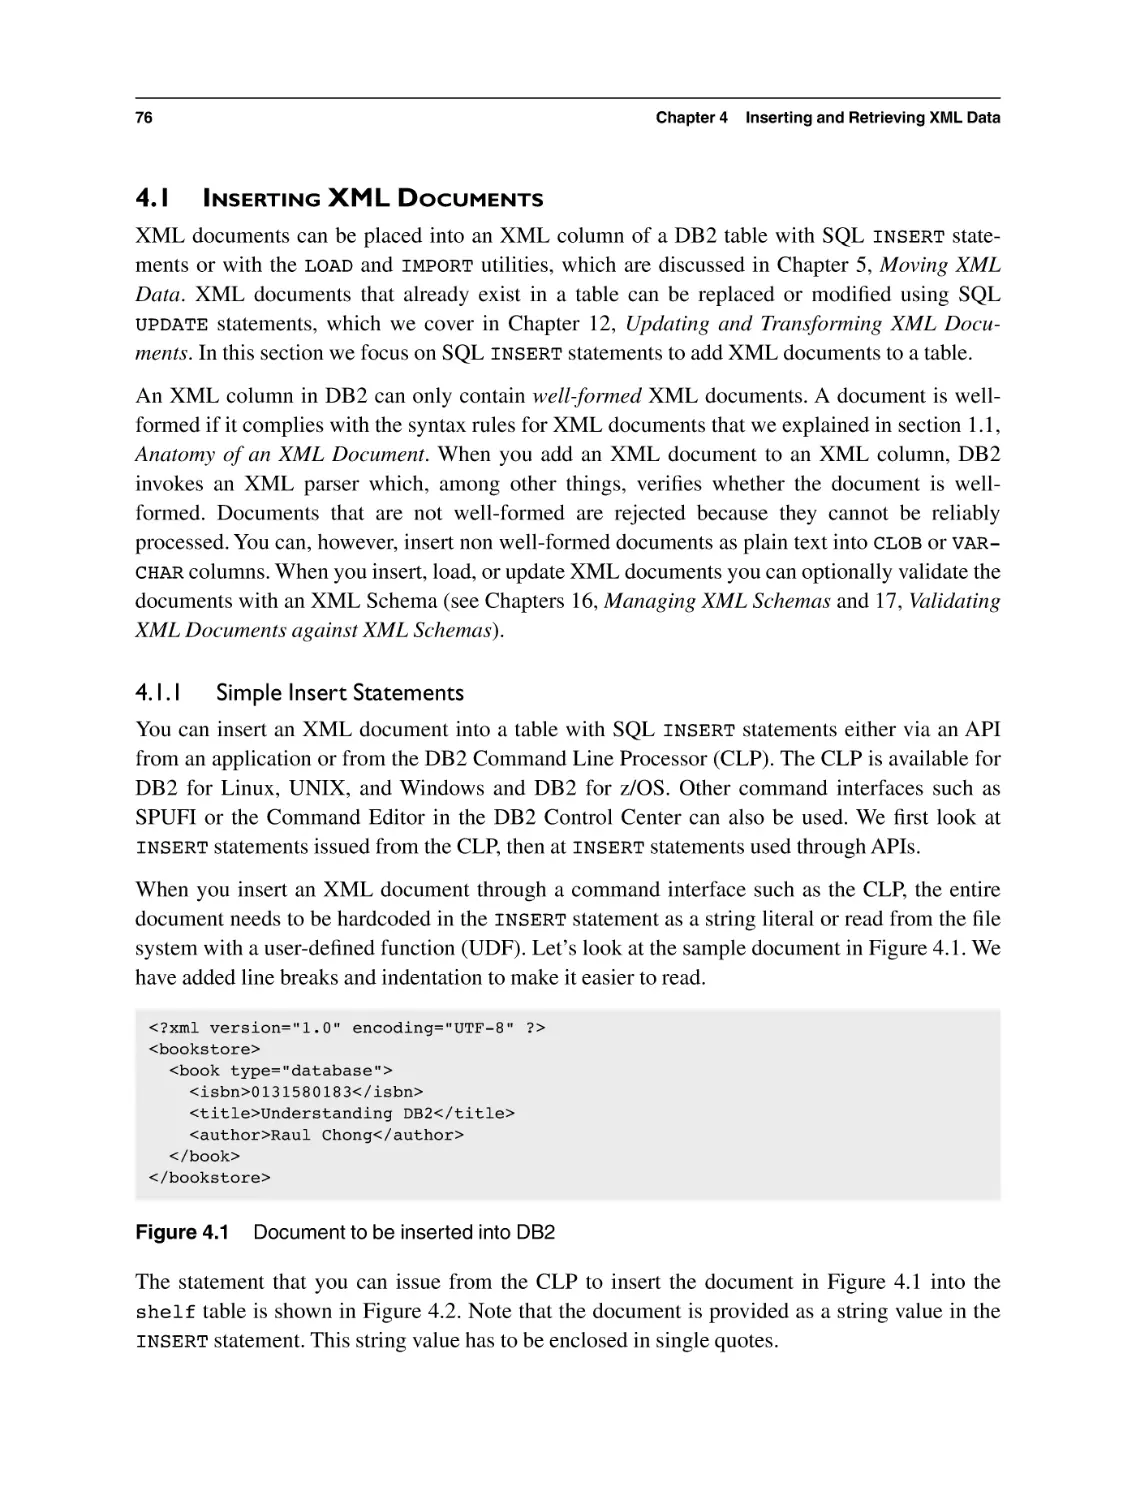 4.1 Inserting XML Documents
4.1.1 Simple Insert Statements